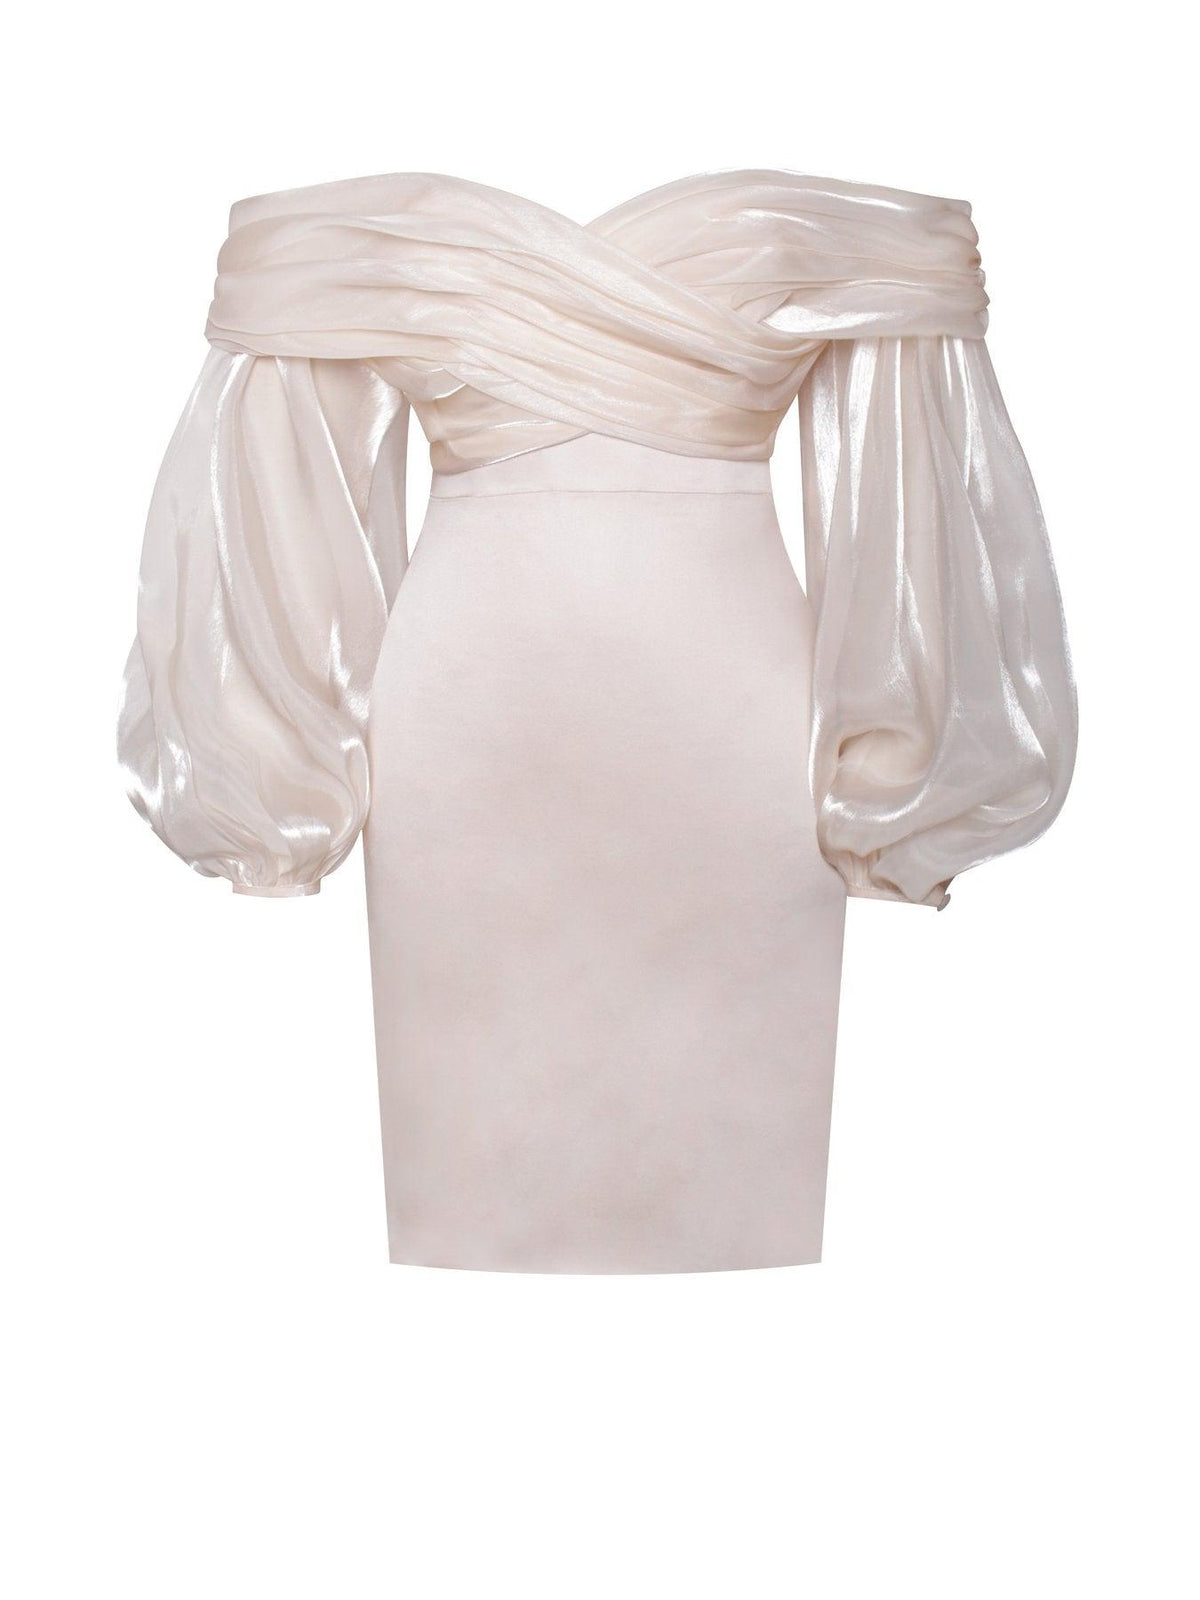 Élégance Luminelle: One-Shoulder Lantern Sleeve Tube Top Dress.-Sheath Dress-StylinArts